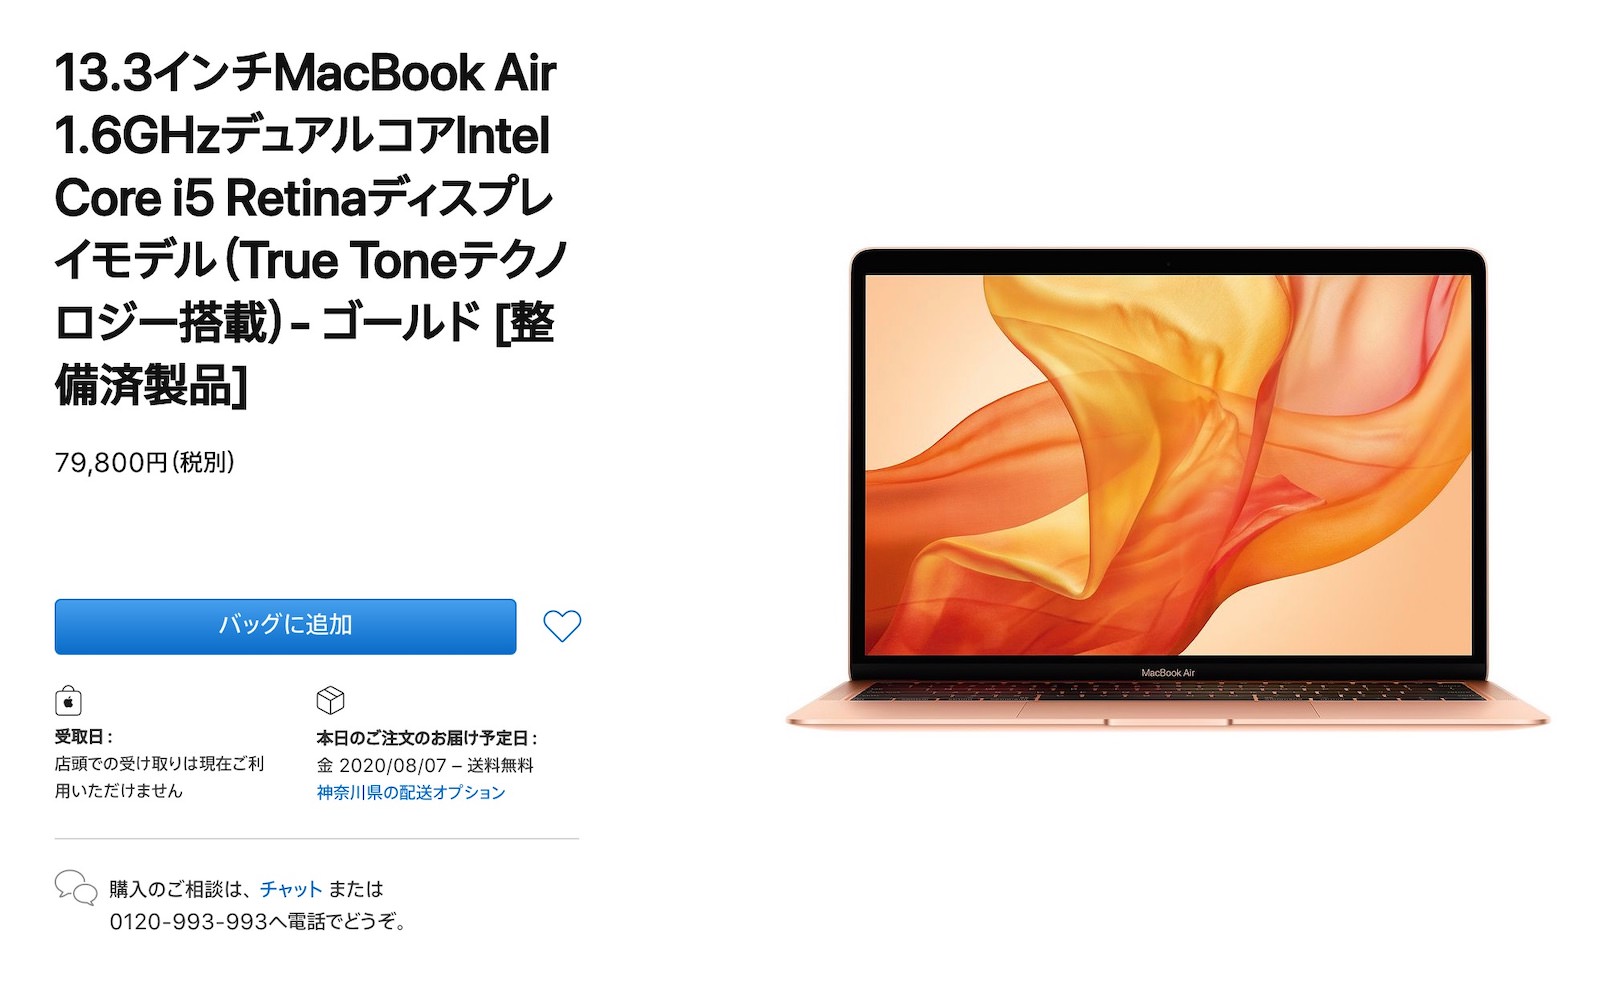 Macbook air refurbished2020805